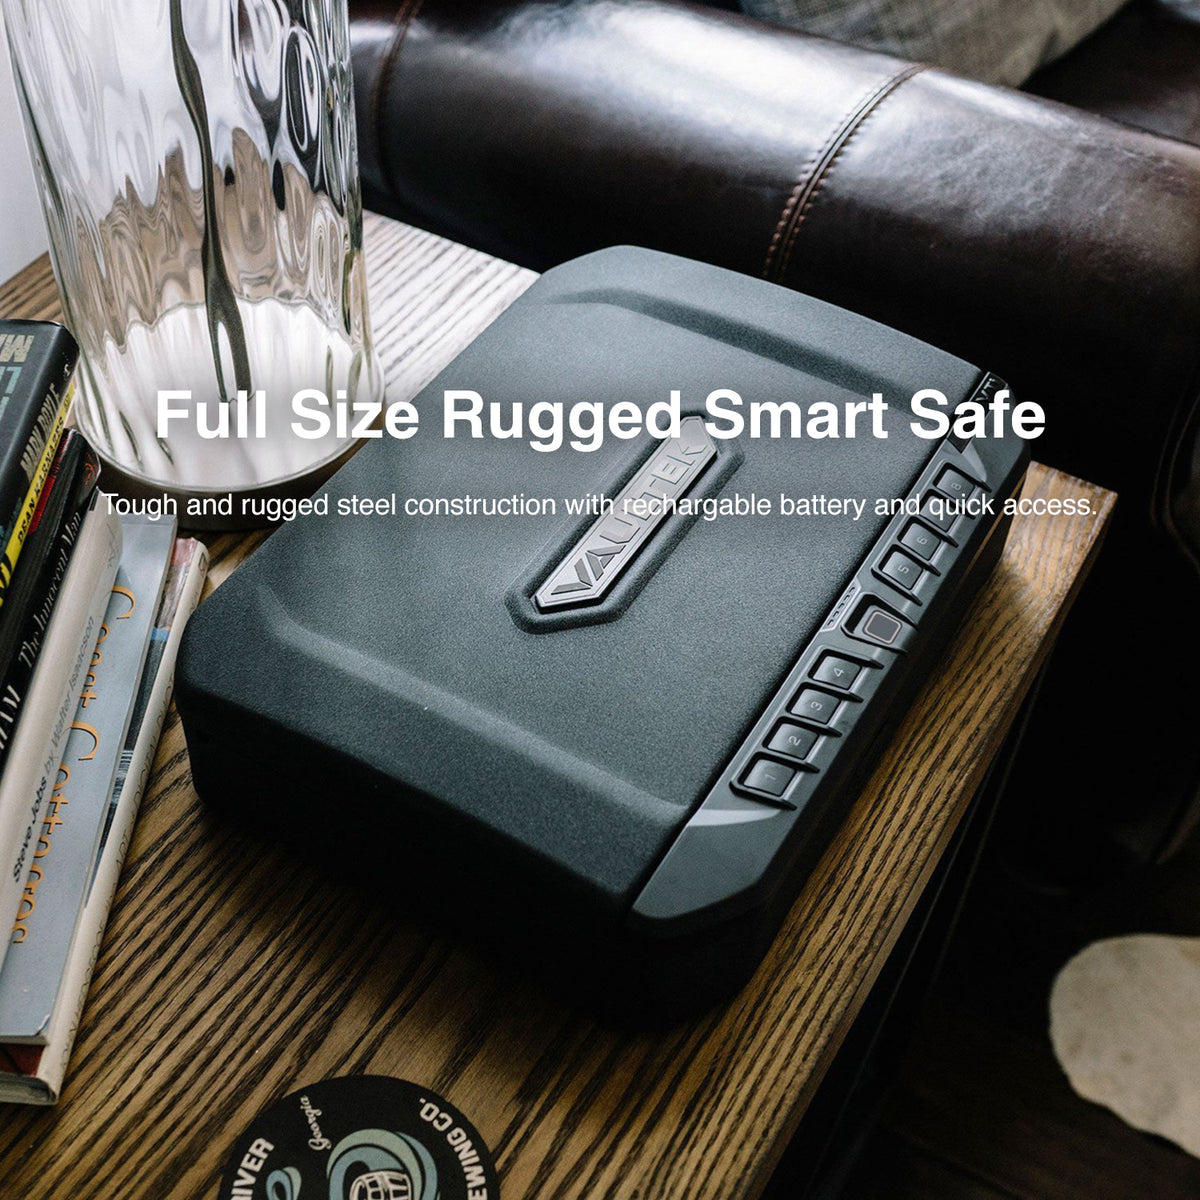 Vaultek® NVTi Full Size Rugged WiFi and Biometric Smart Safe